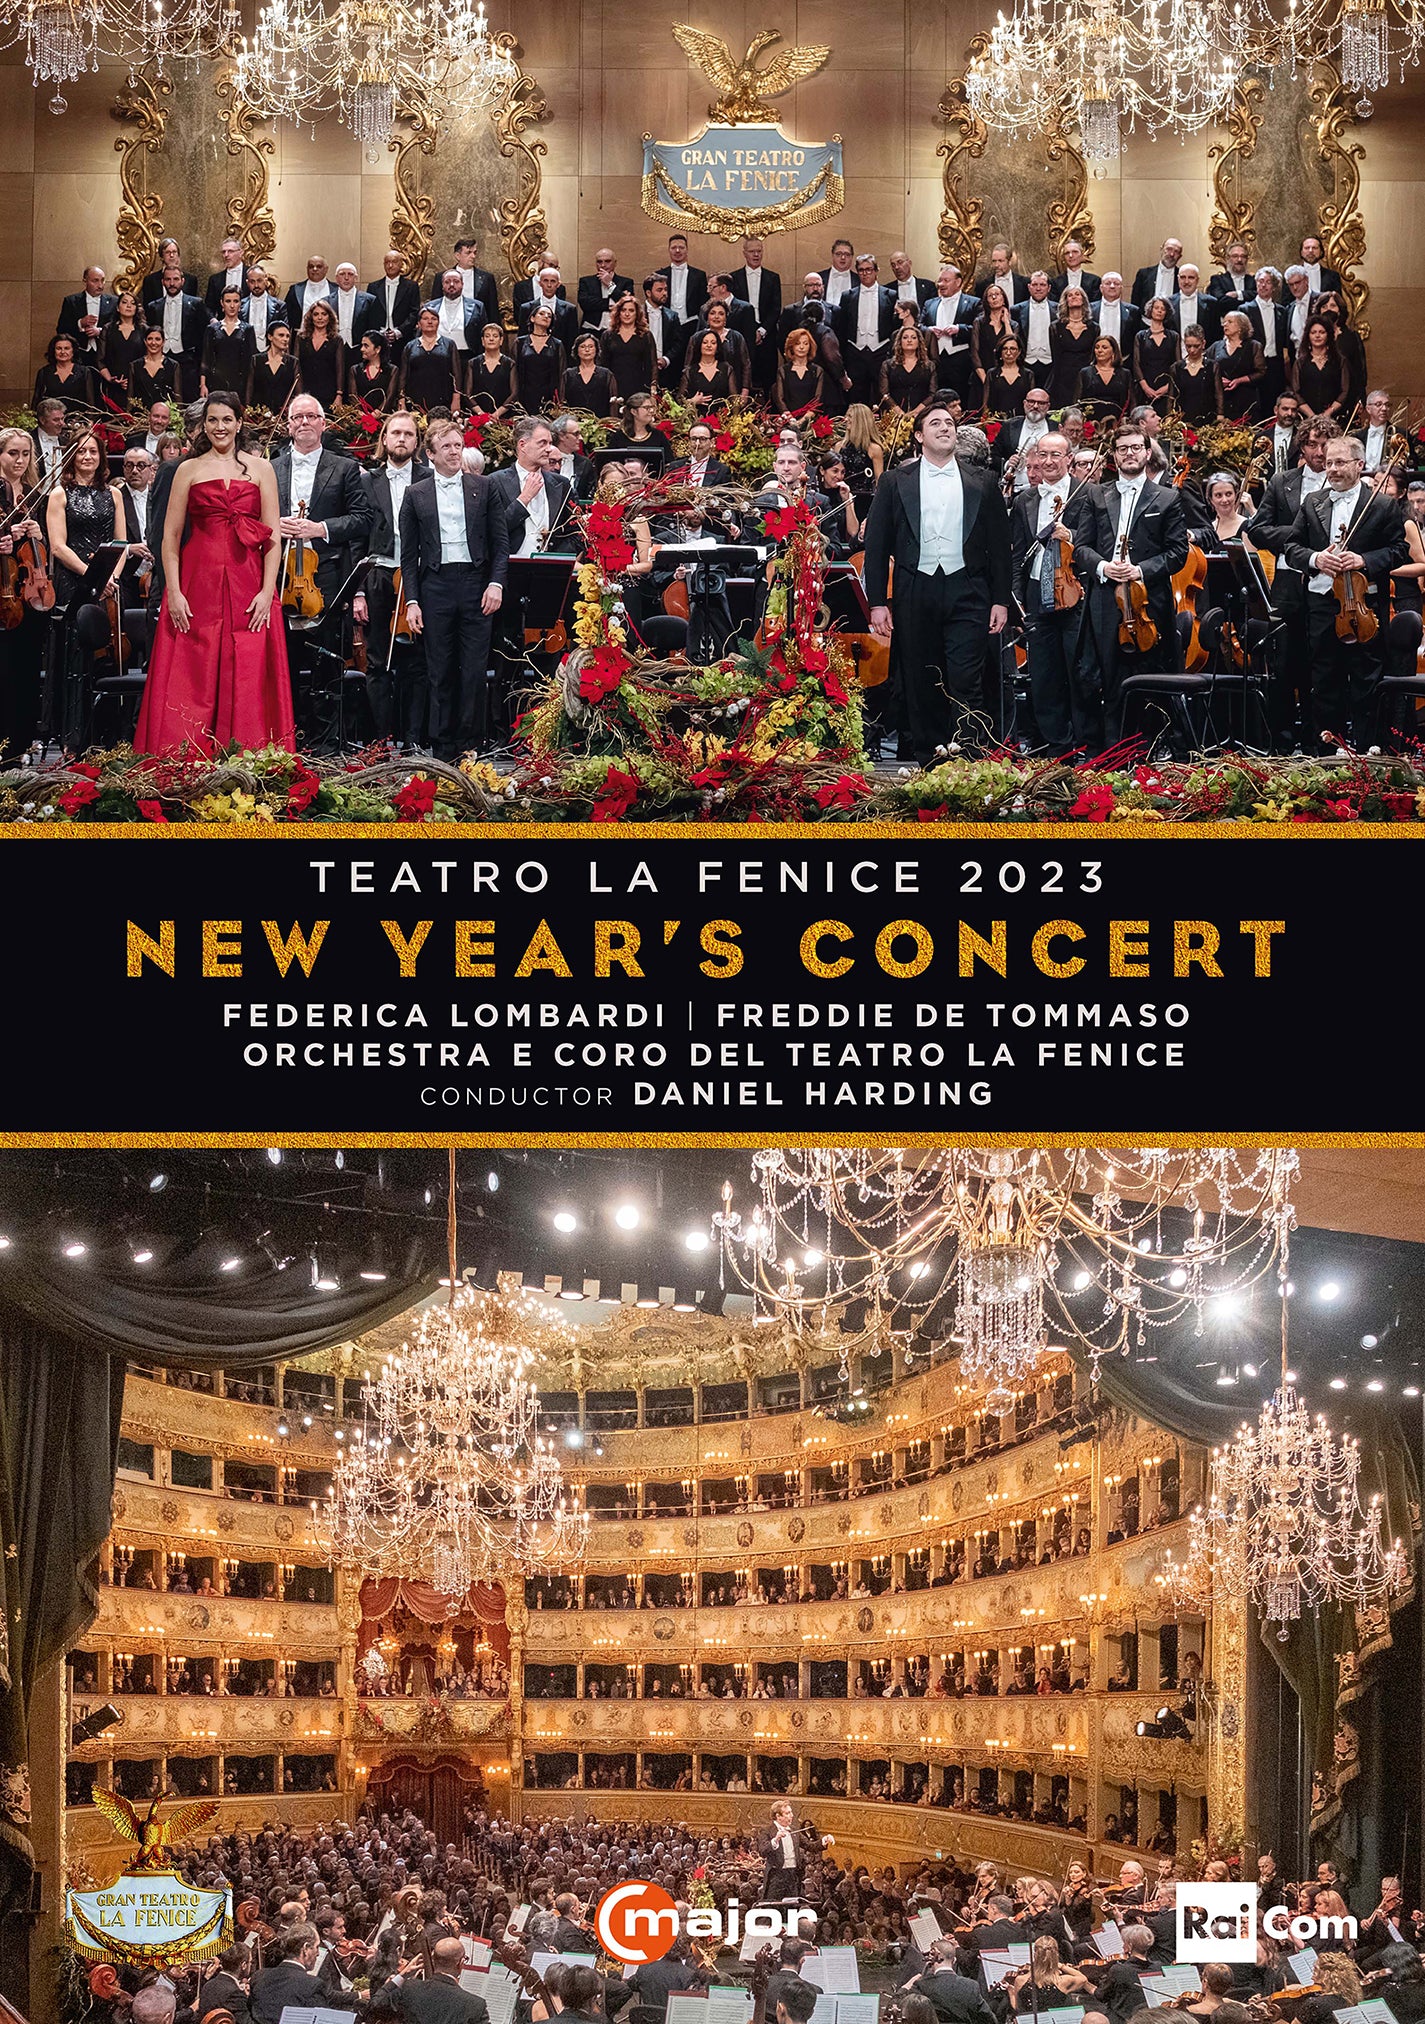 Teatro la Fenice New Year‘s Concert 2023 / Harding, Teatro la Fenice Orchestra & Chorus